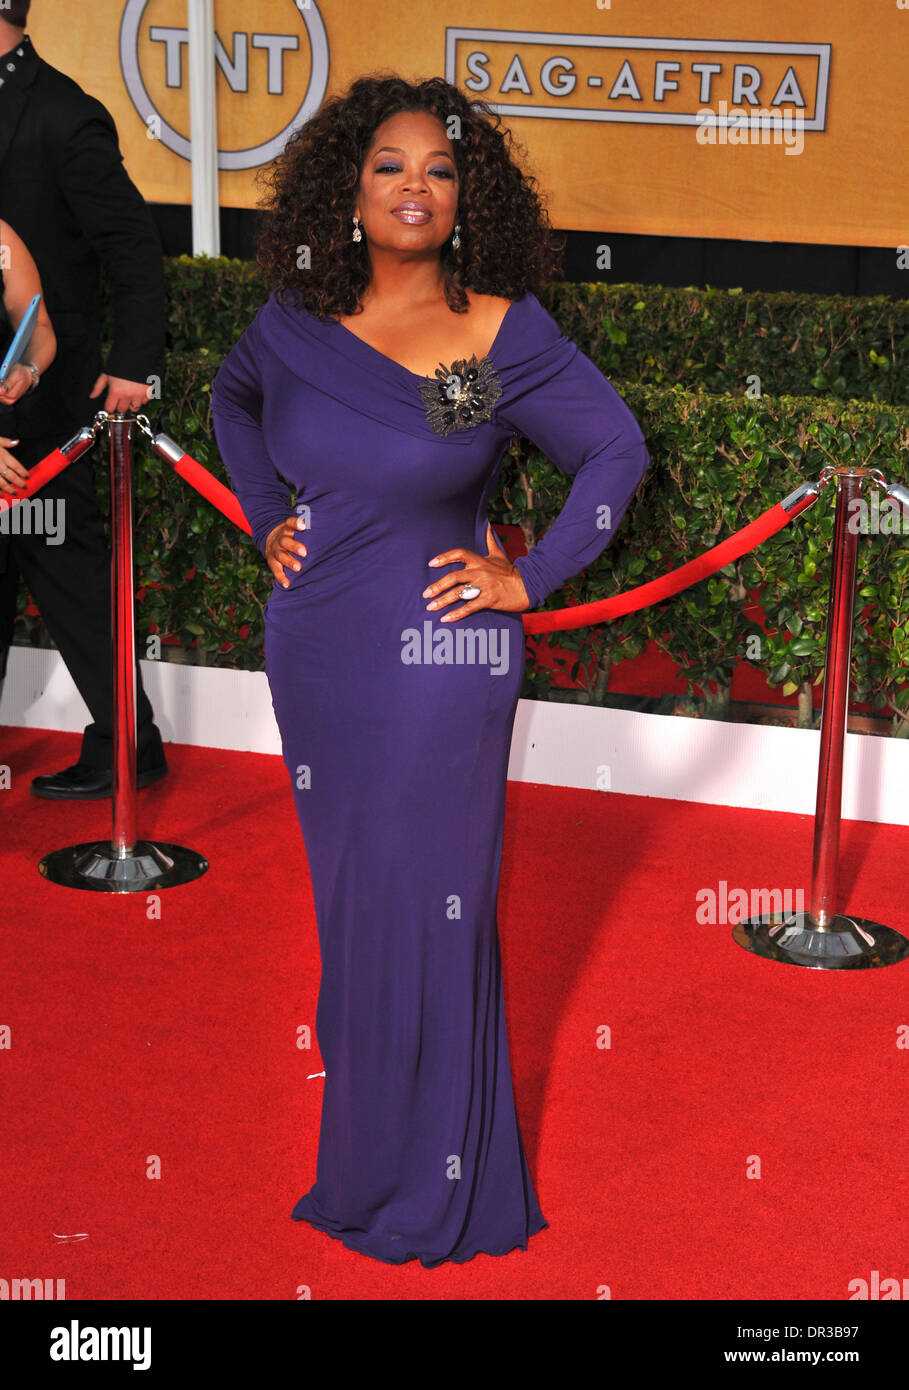 Los Angeles, California, USA. 18 gennaio, 2014. Oprah Winfrey © D. lunga/Globe foto/ZUMAPRESS.com/Alamy Live News Foto Stock